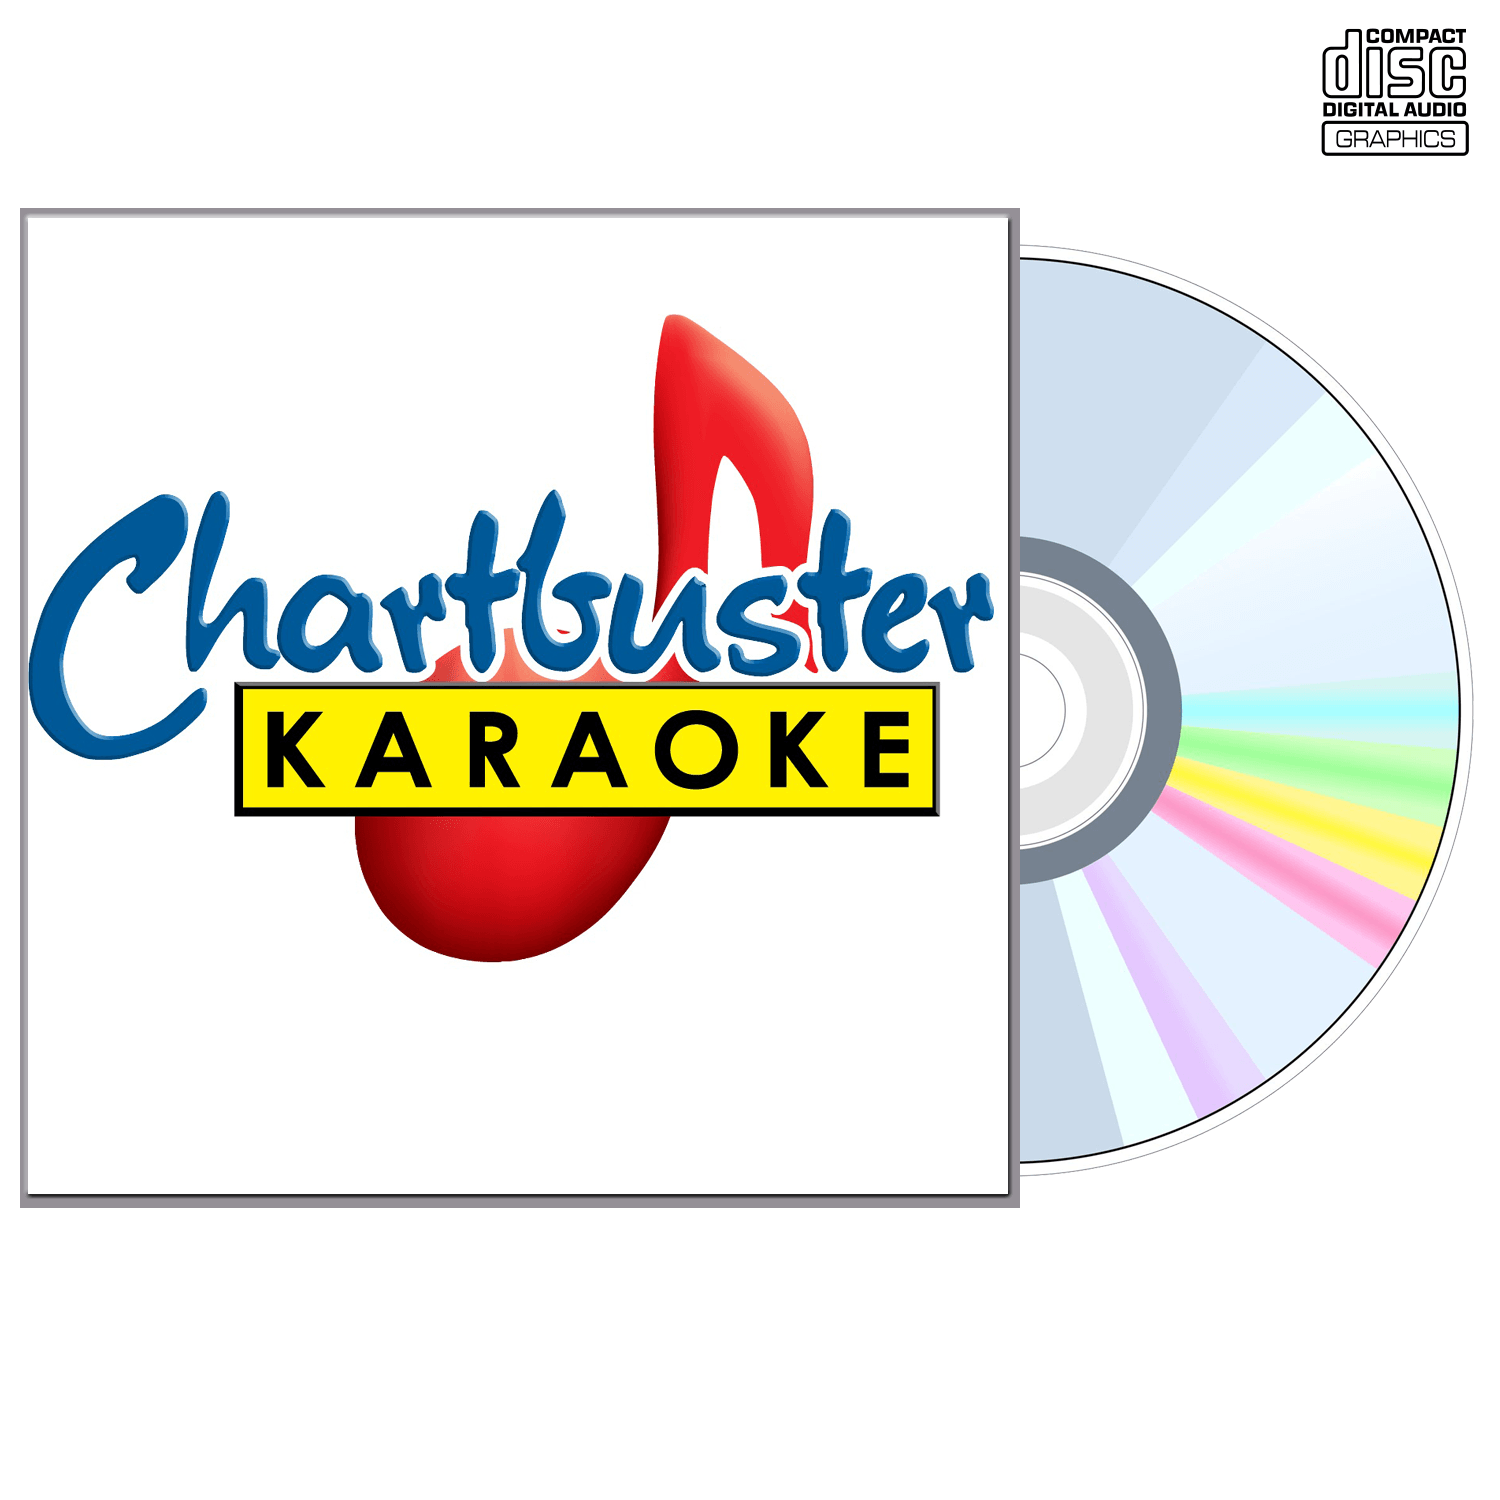 Best Of Amy Grant - CD+G - Chartbuster Karaoke - Karaoke Home Entertainment